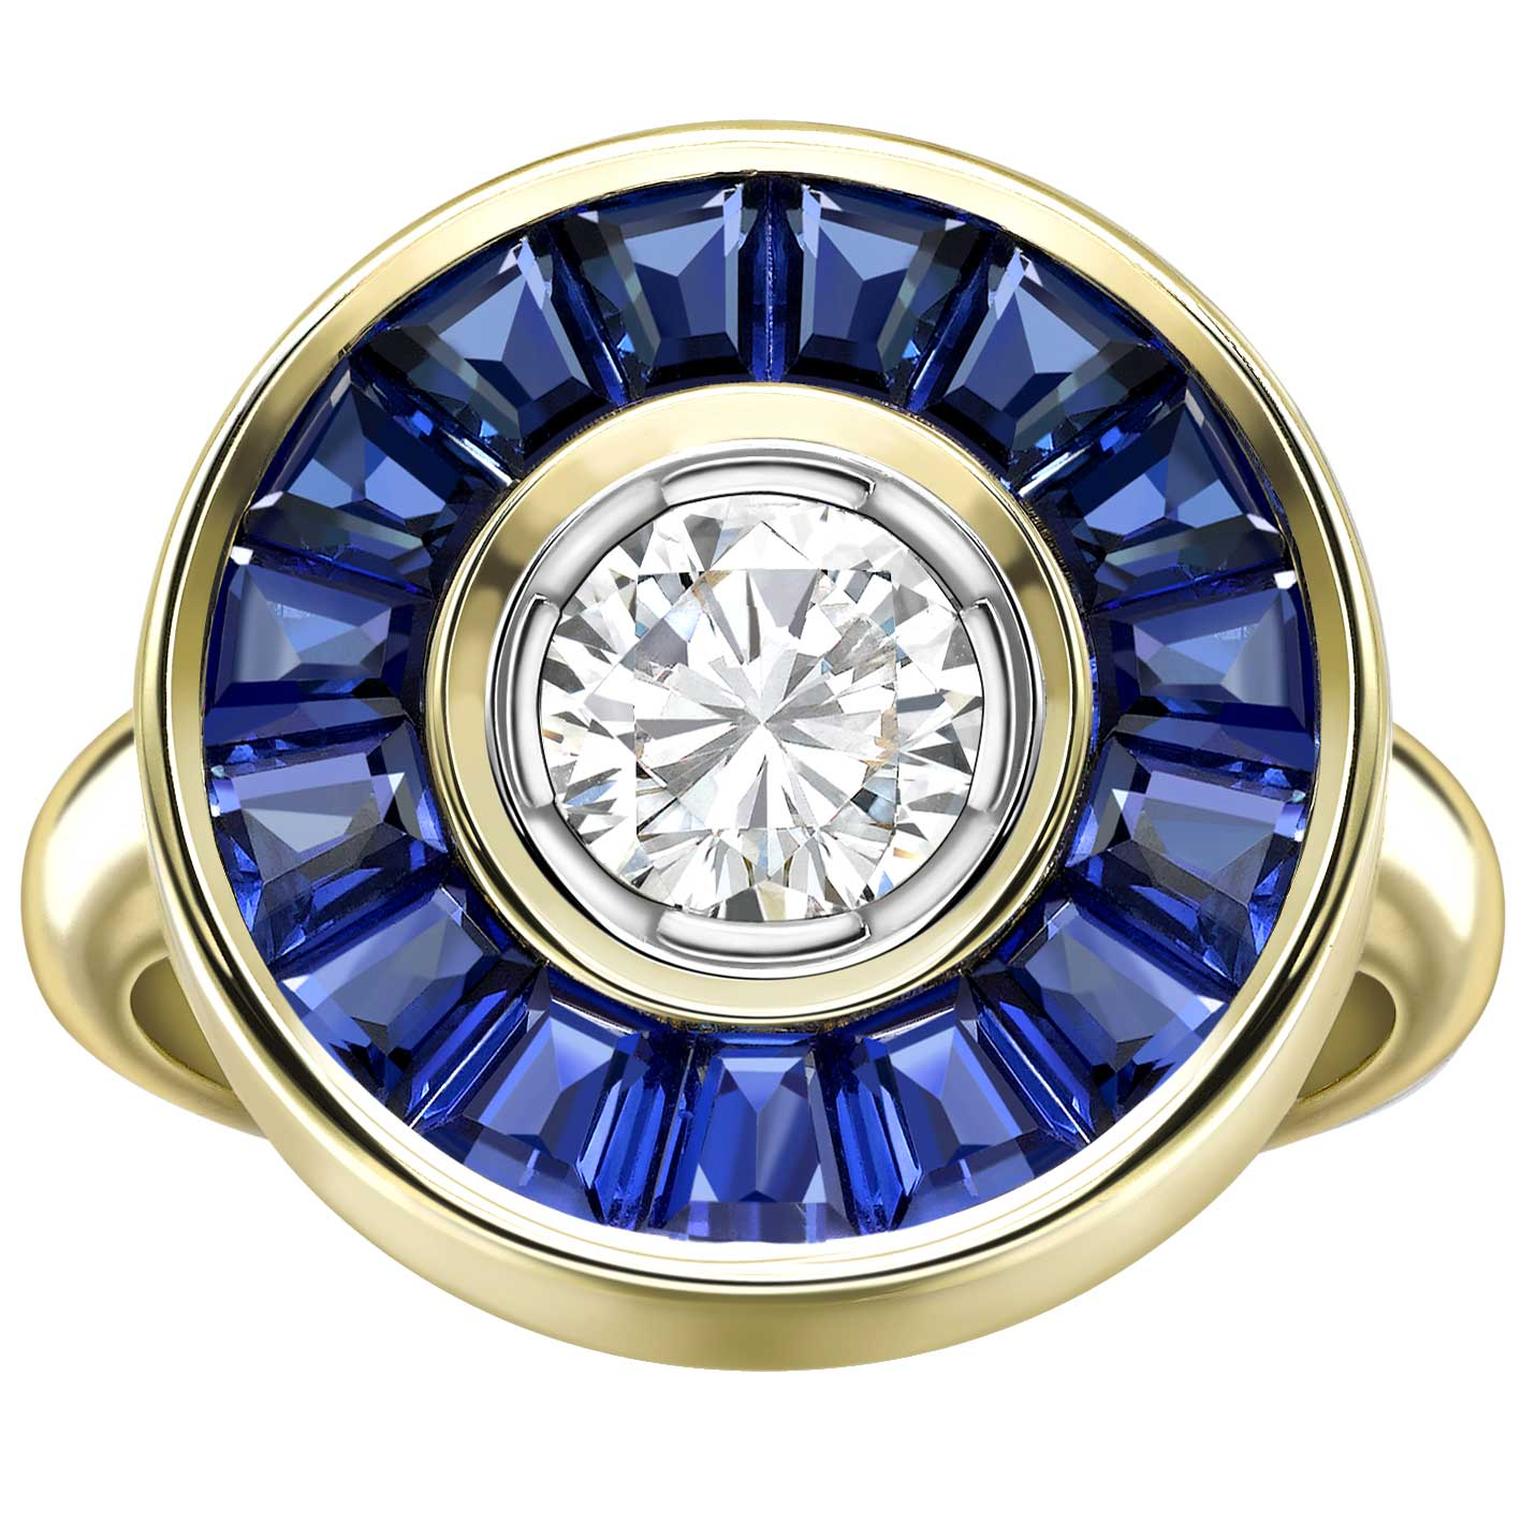 Bespoke Hattie Rickards blue sapphire and diamond engagement ring